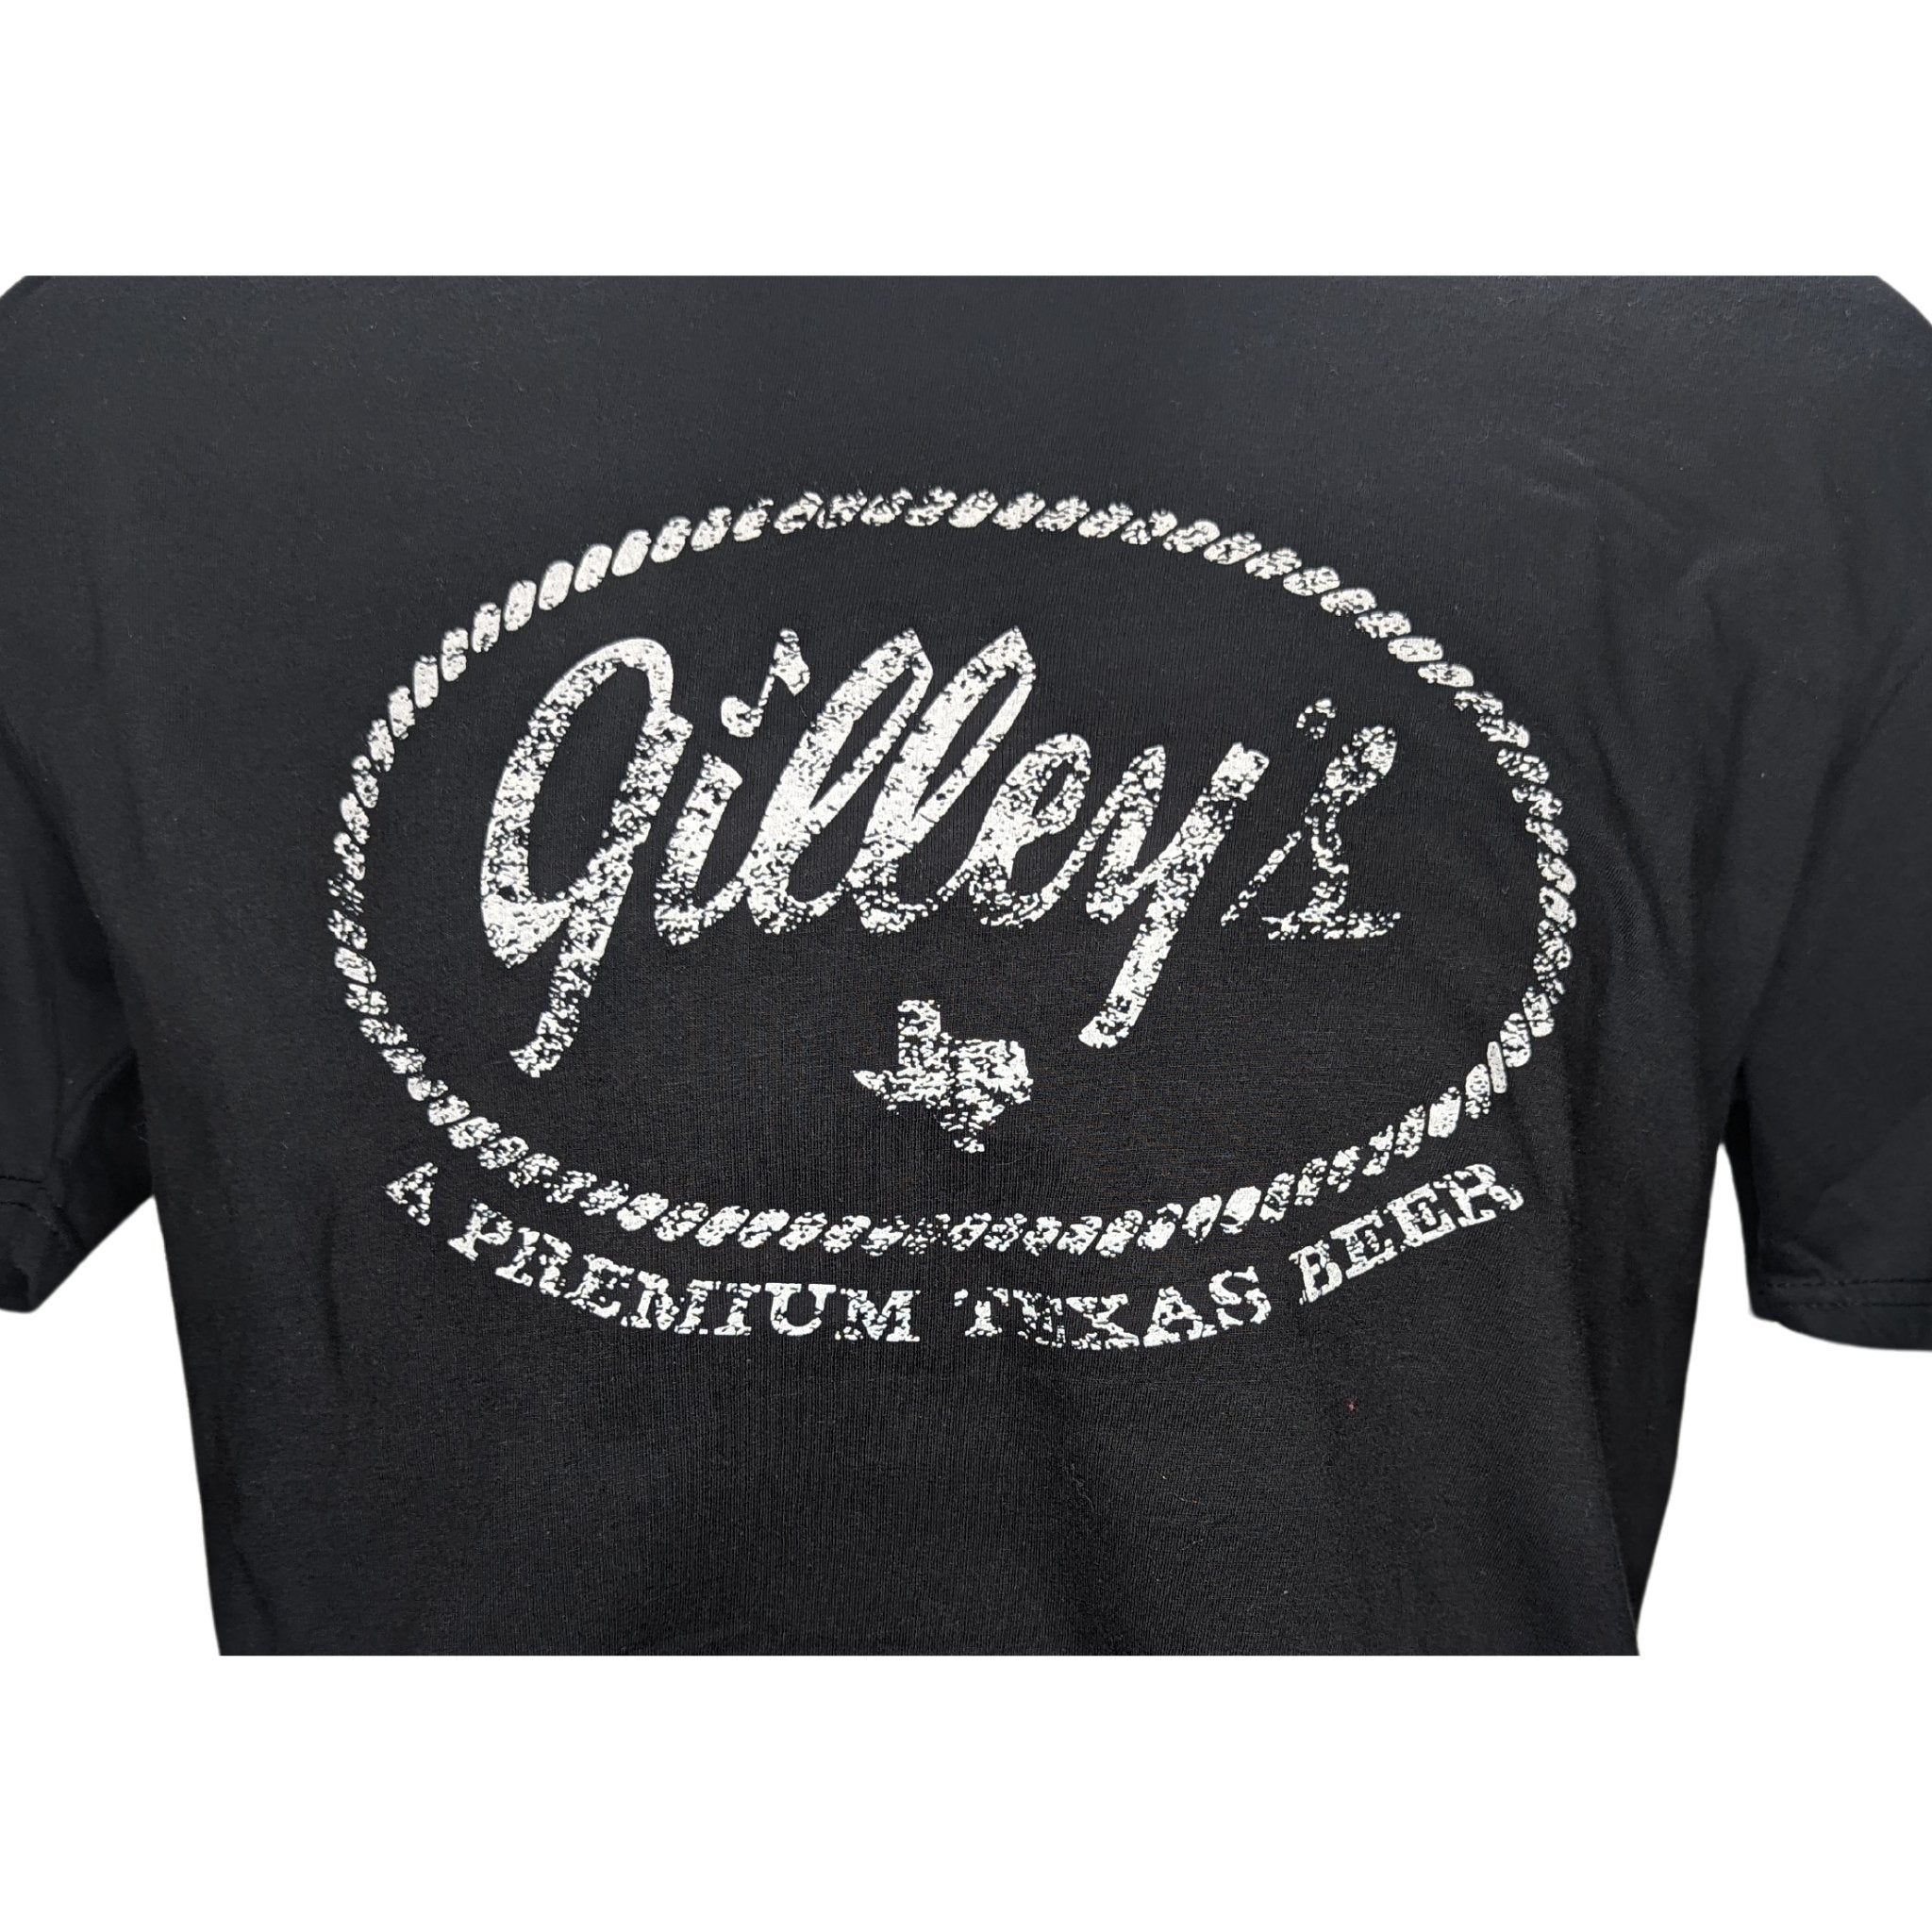 Gilley's Beer Vintage Logo Shirt - 100 % Cotton, Soft, Comfortable, Unisex Shirt - Gilley's Food & Beverage